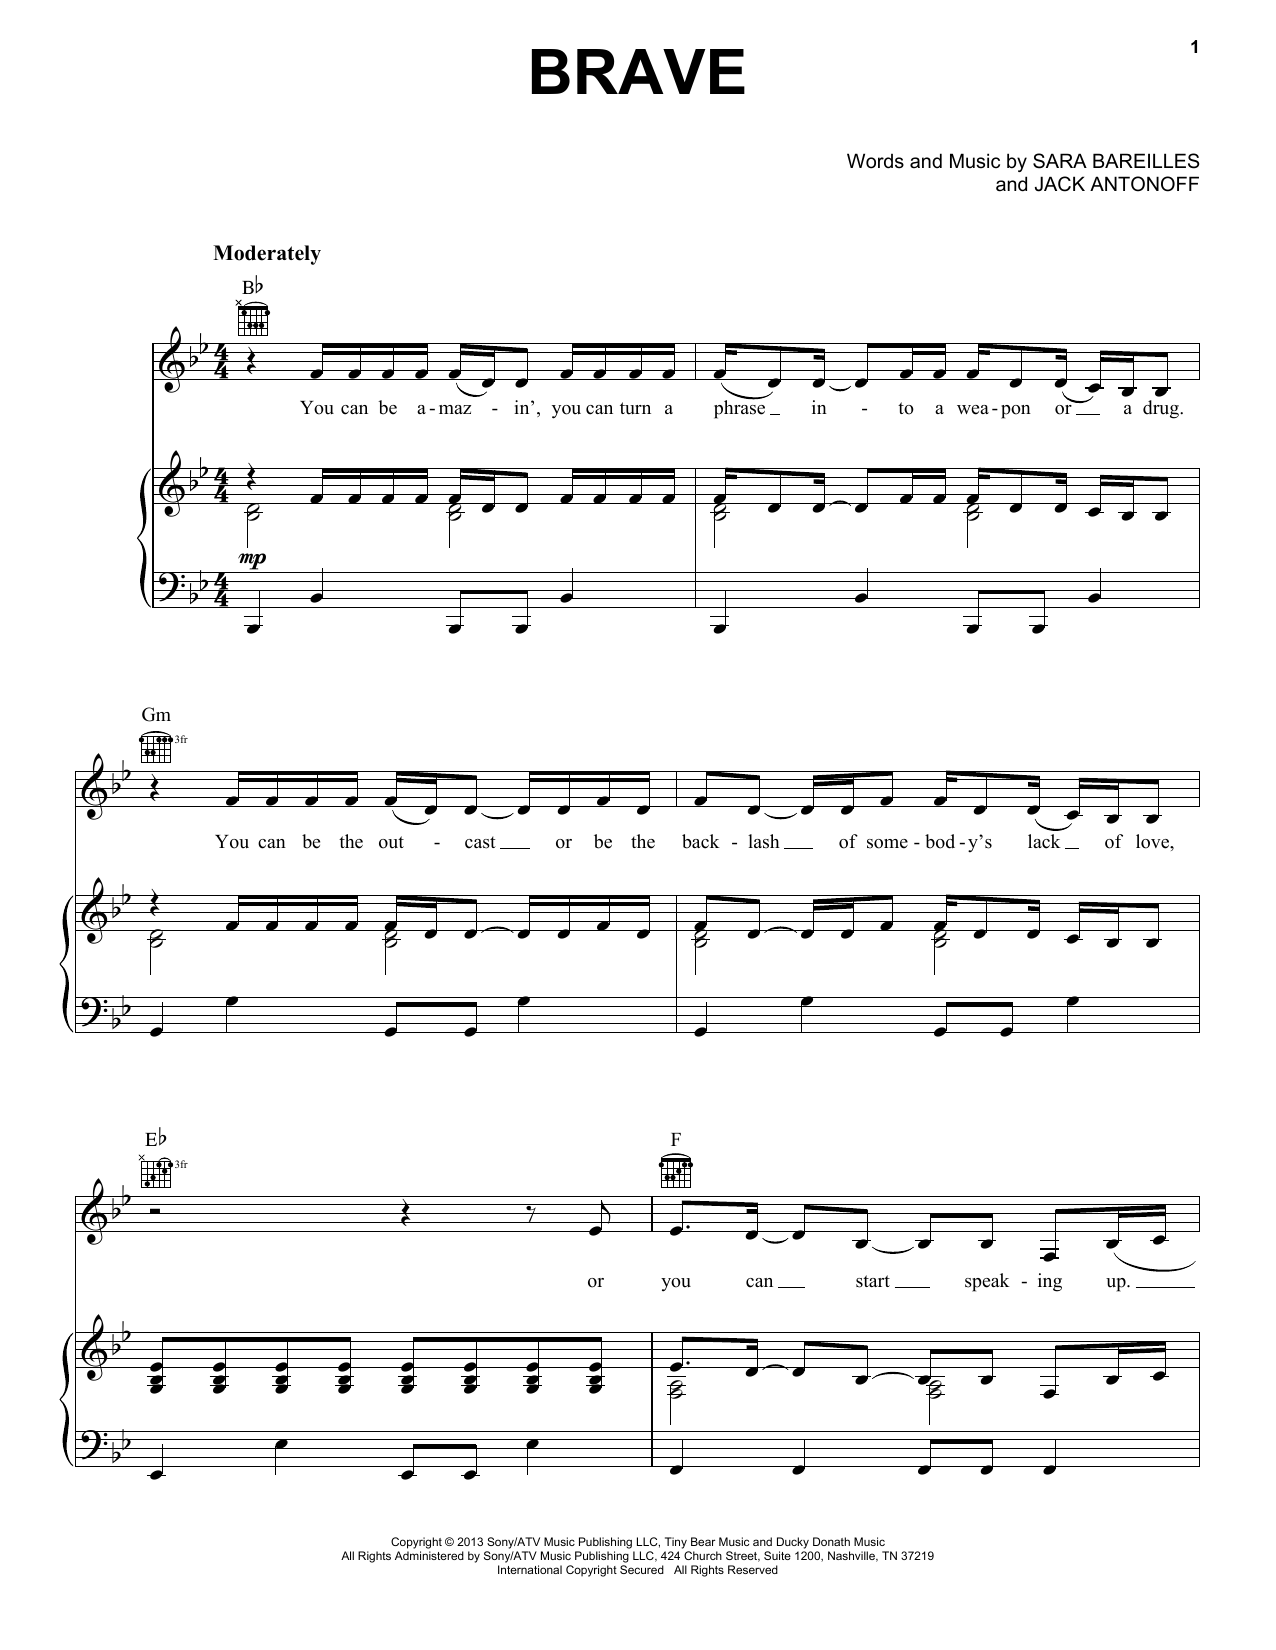 Sara Bareilles Brave Sheet Music Notes & Chords for Easy Guitar Tab - Download or Print PDF